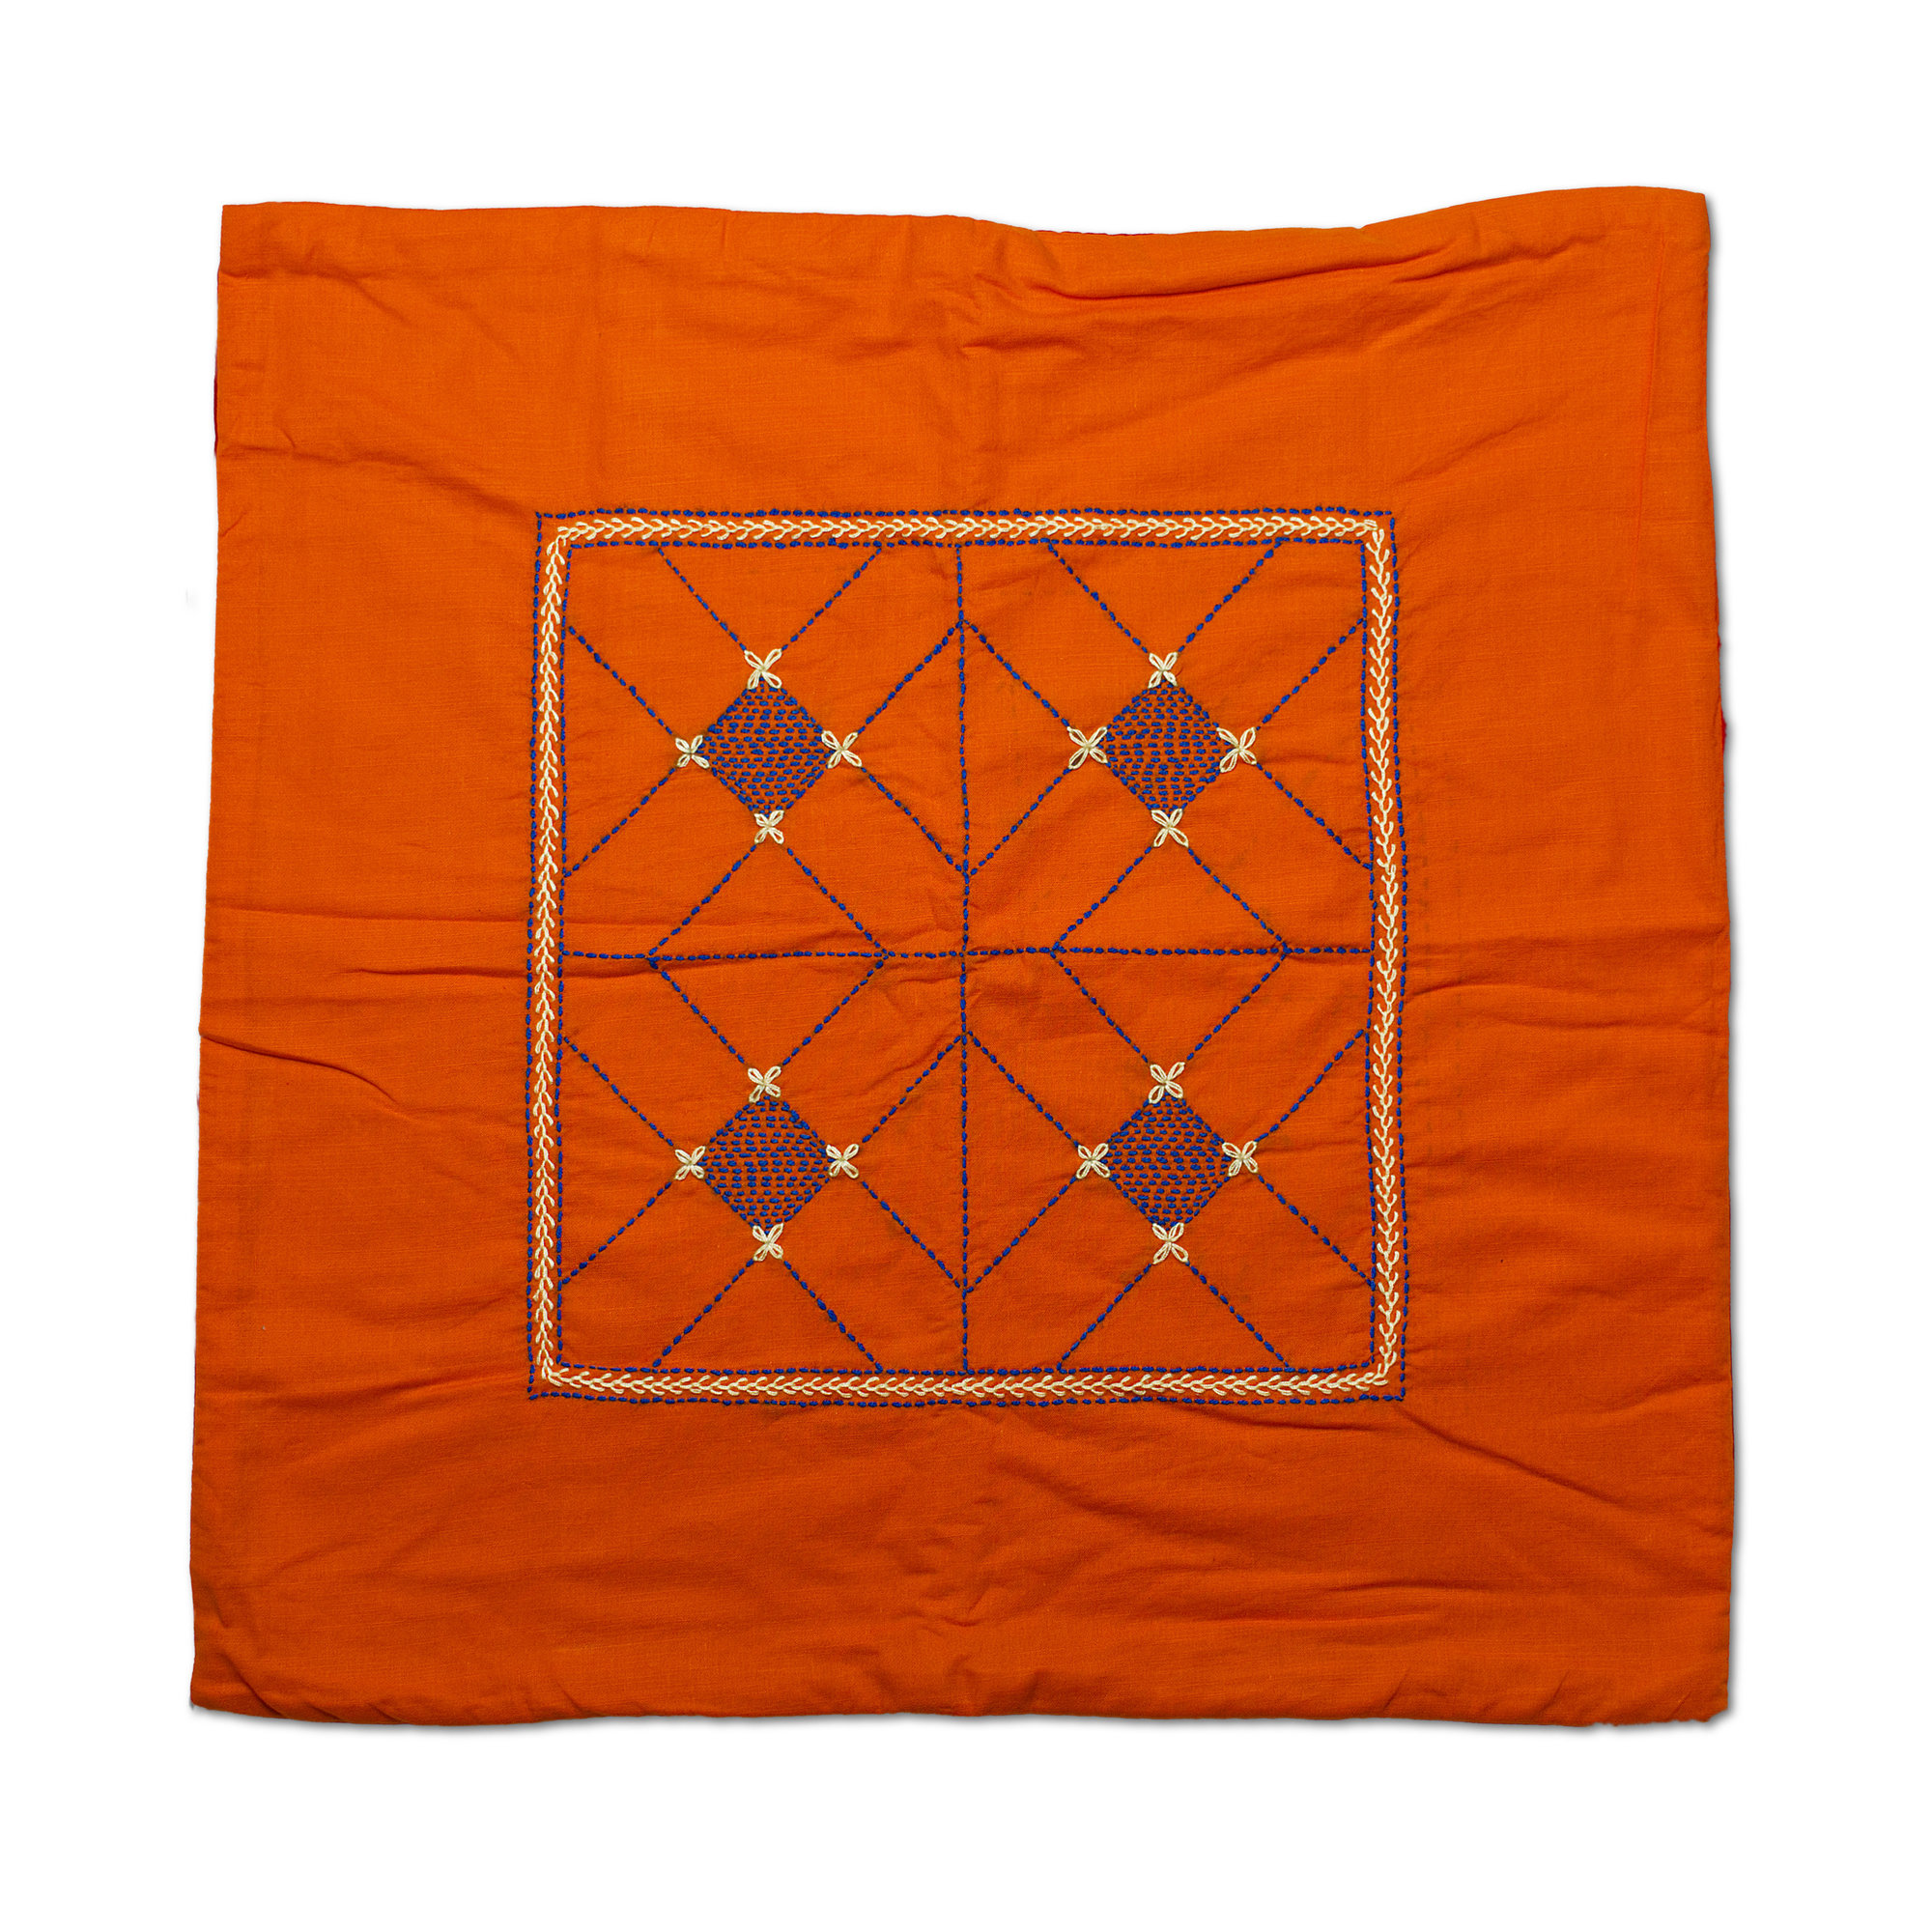 Cushion Cover - Kurigram (geometric) In Asif (orange)